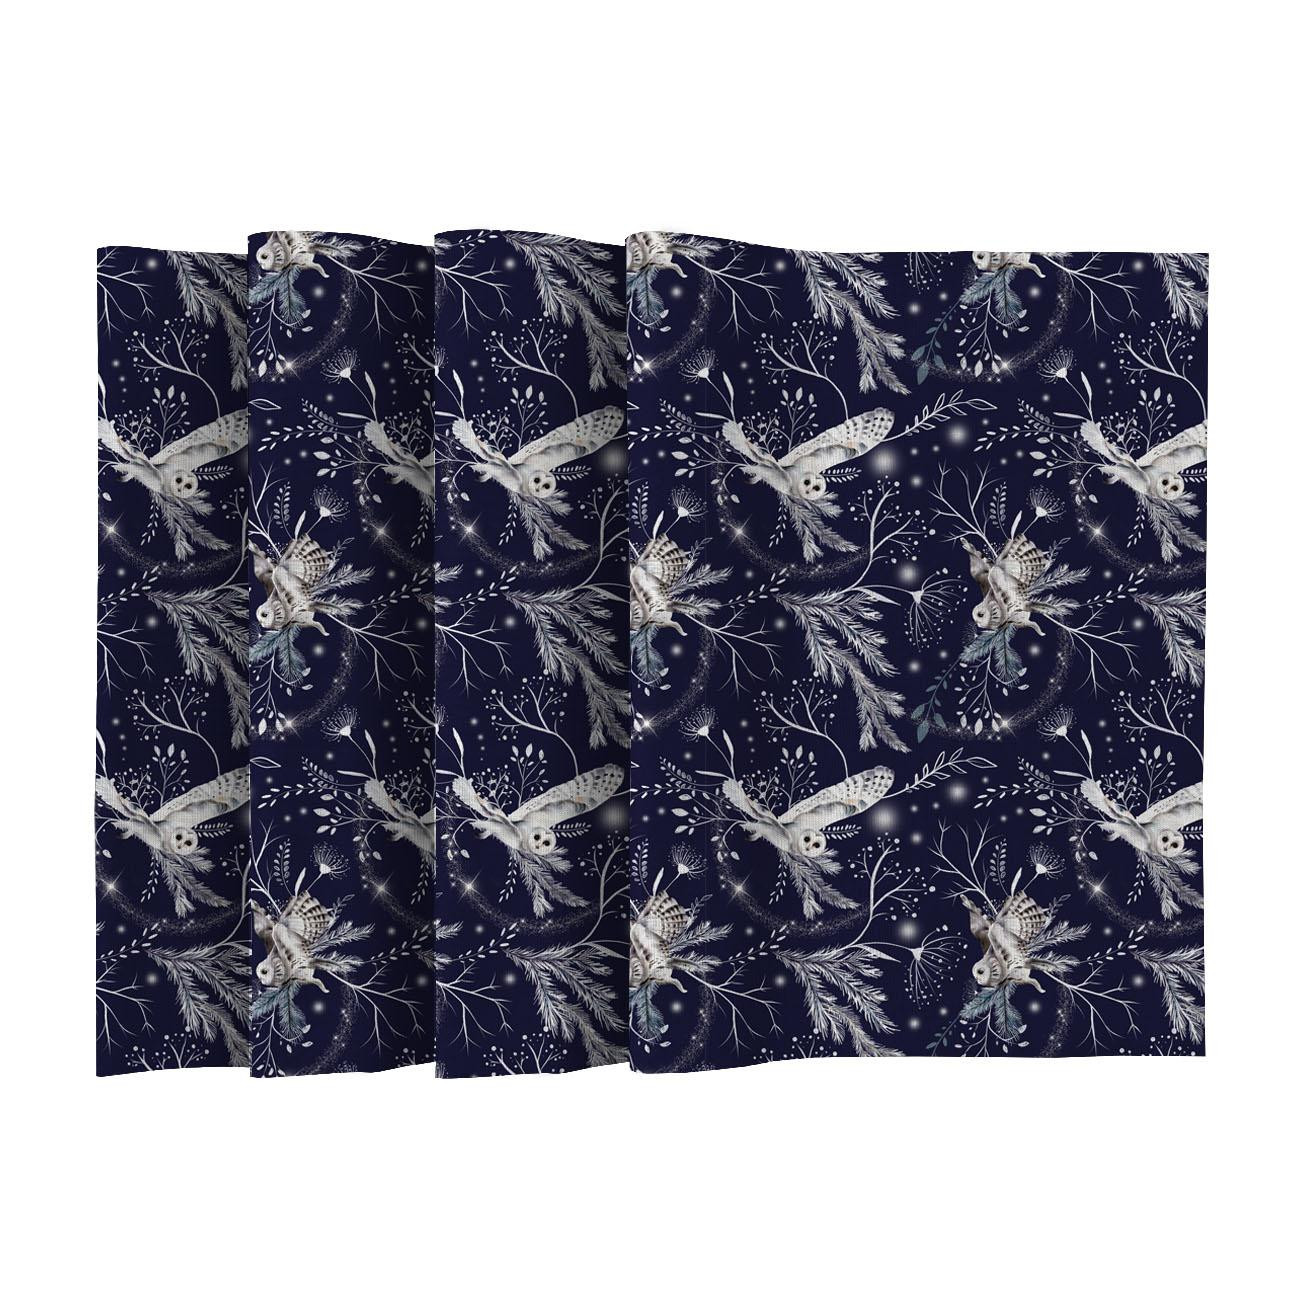 NAPKINS AND RUNNER - WINTER OWLS / dark blue (WINTER IN PARK) - sewing set